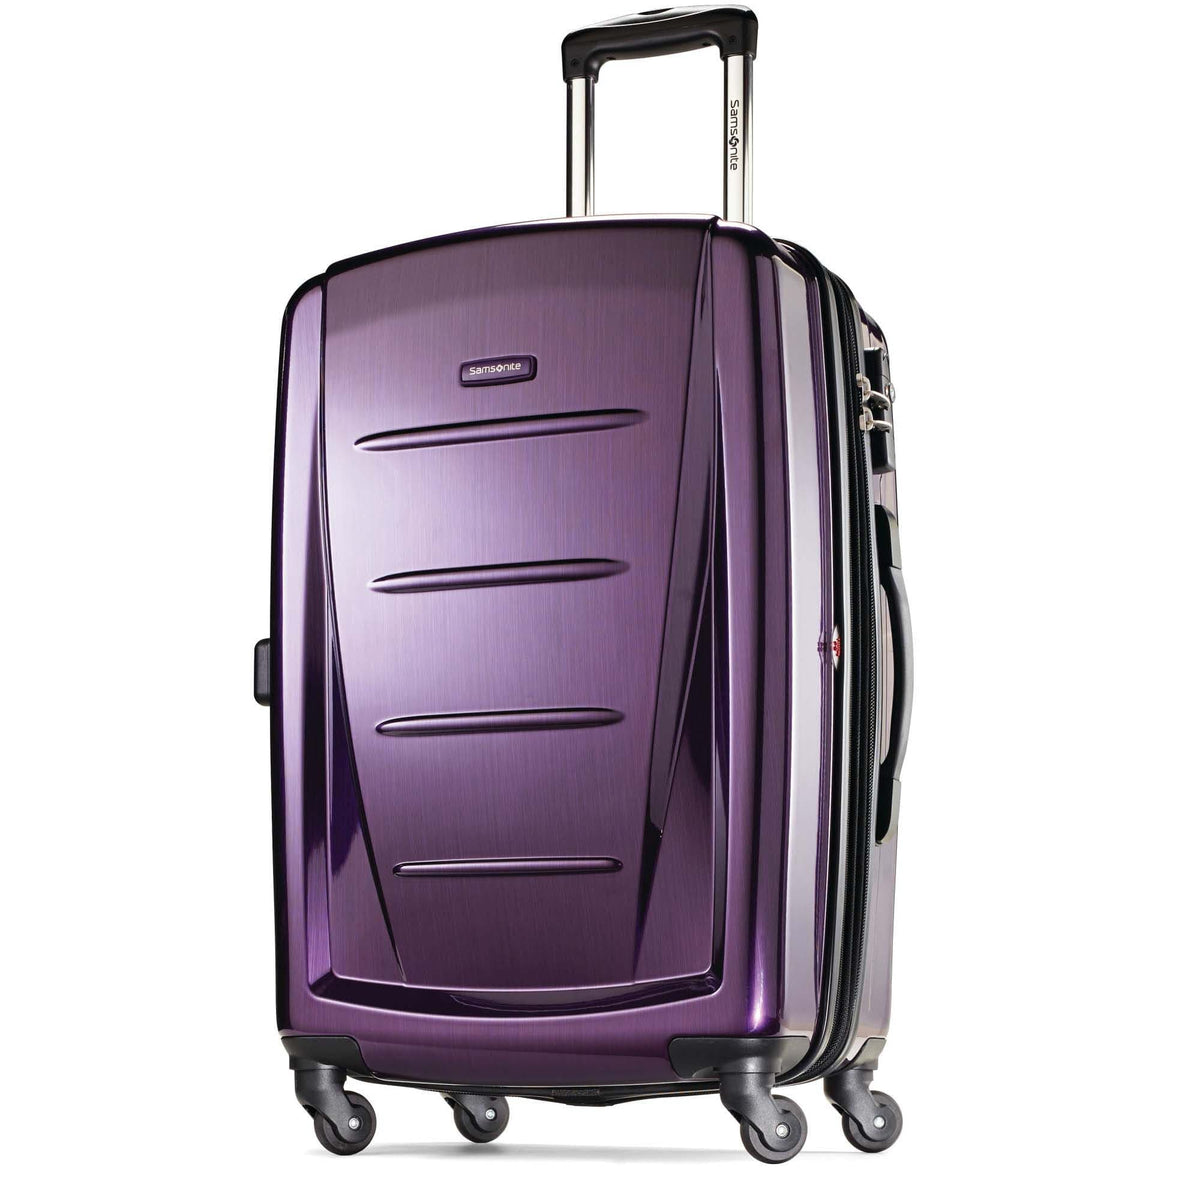 Samsonite Winfield 2 Fashion 20" Hardside Spinner Luggage